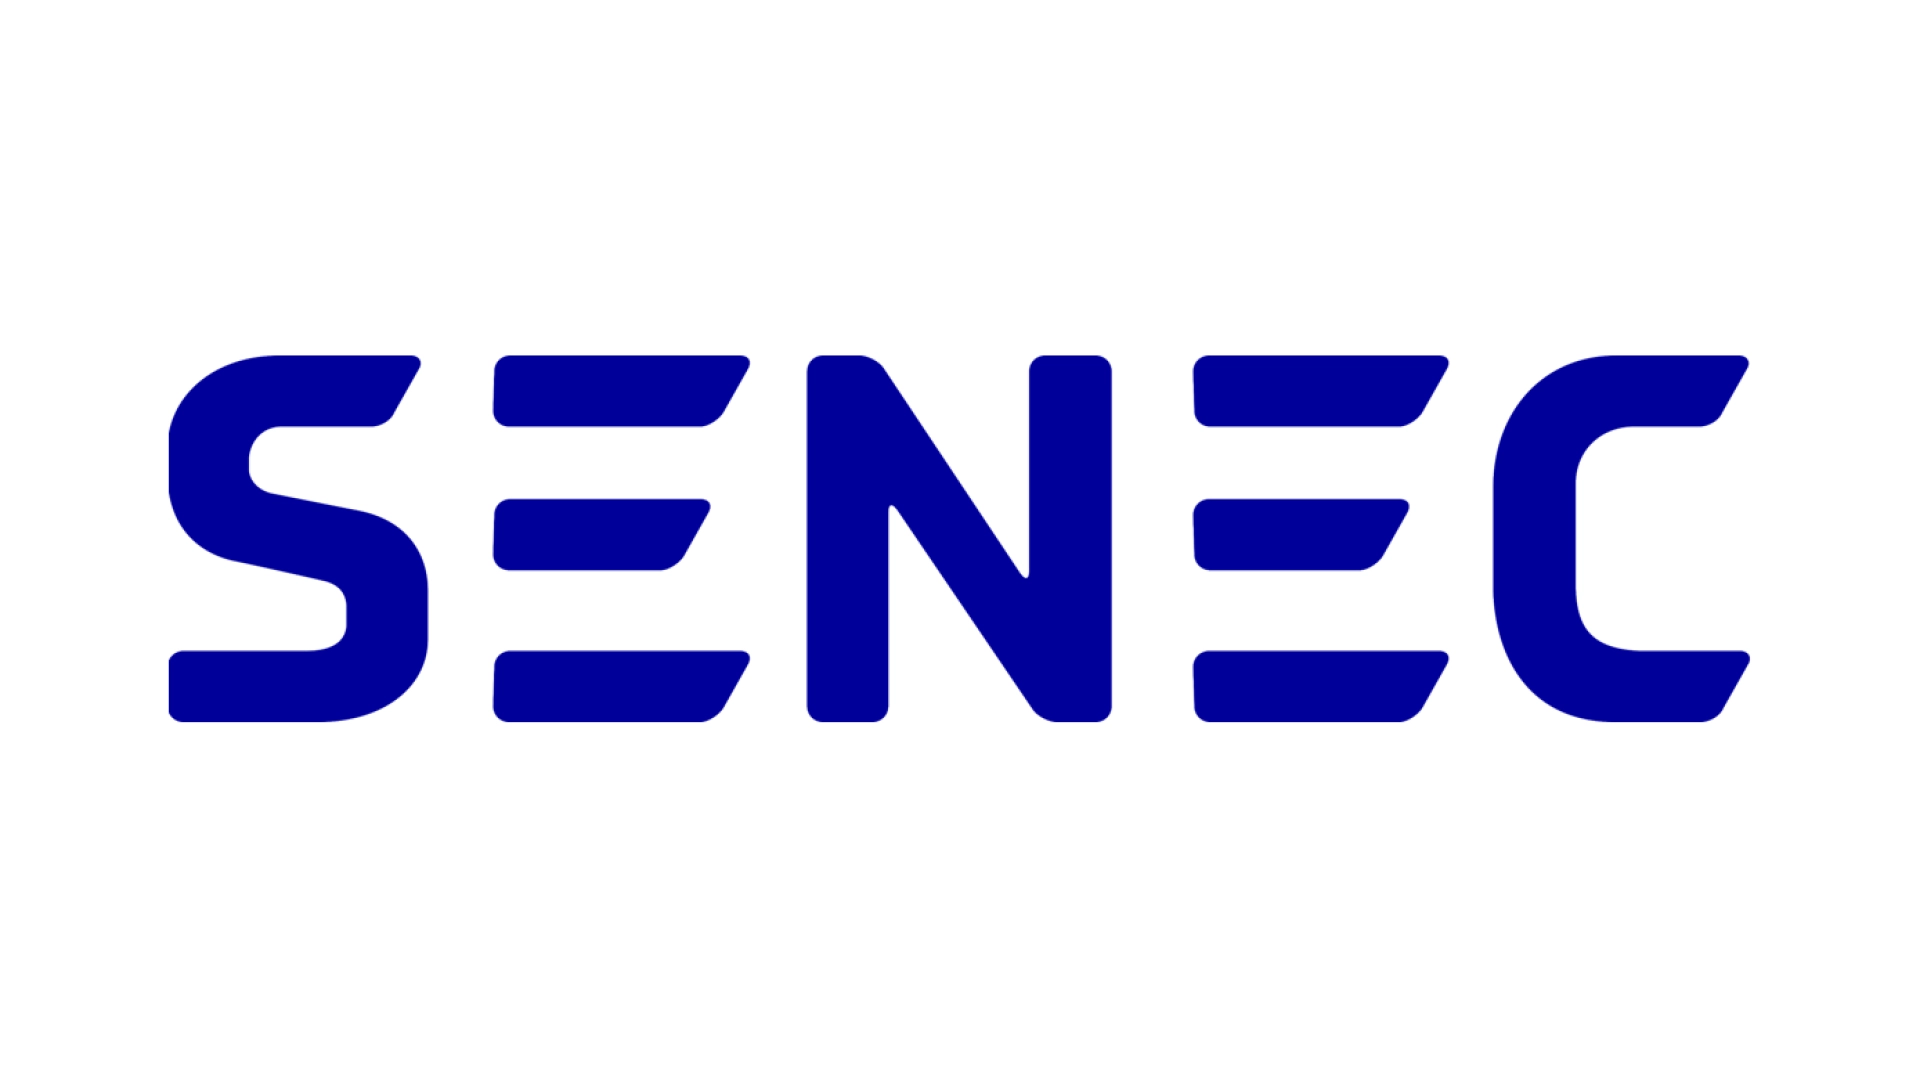 SENEC Logo blau